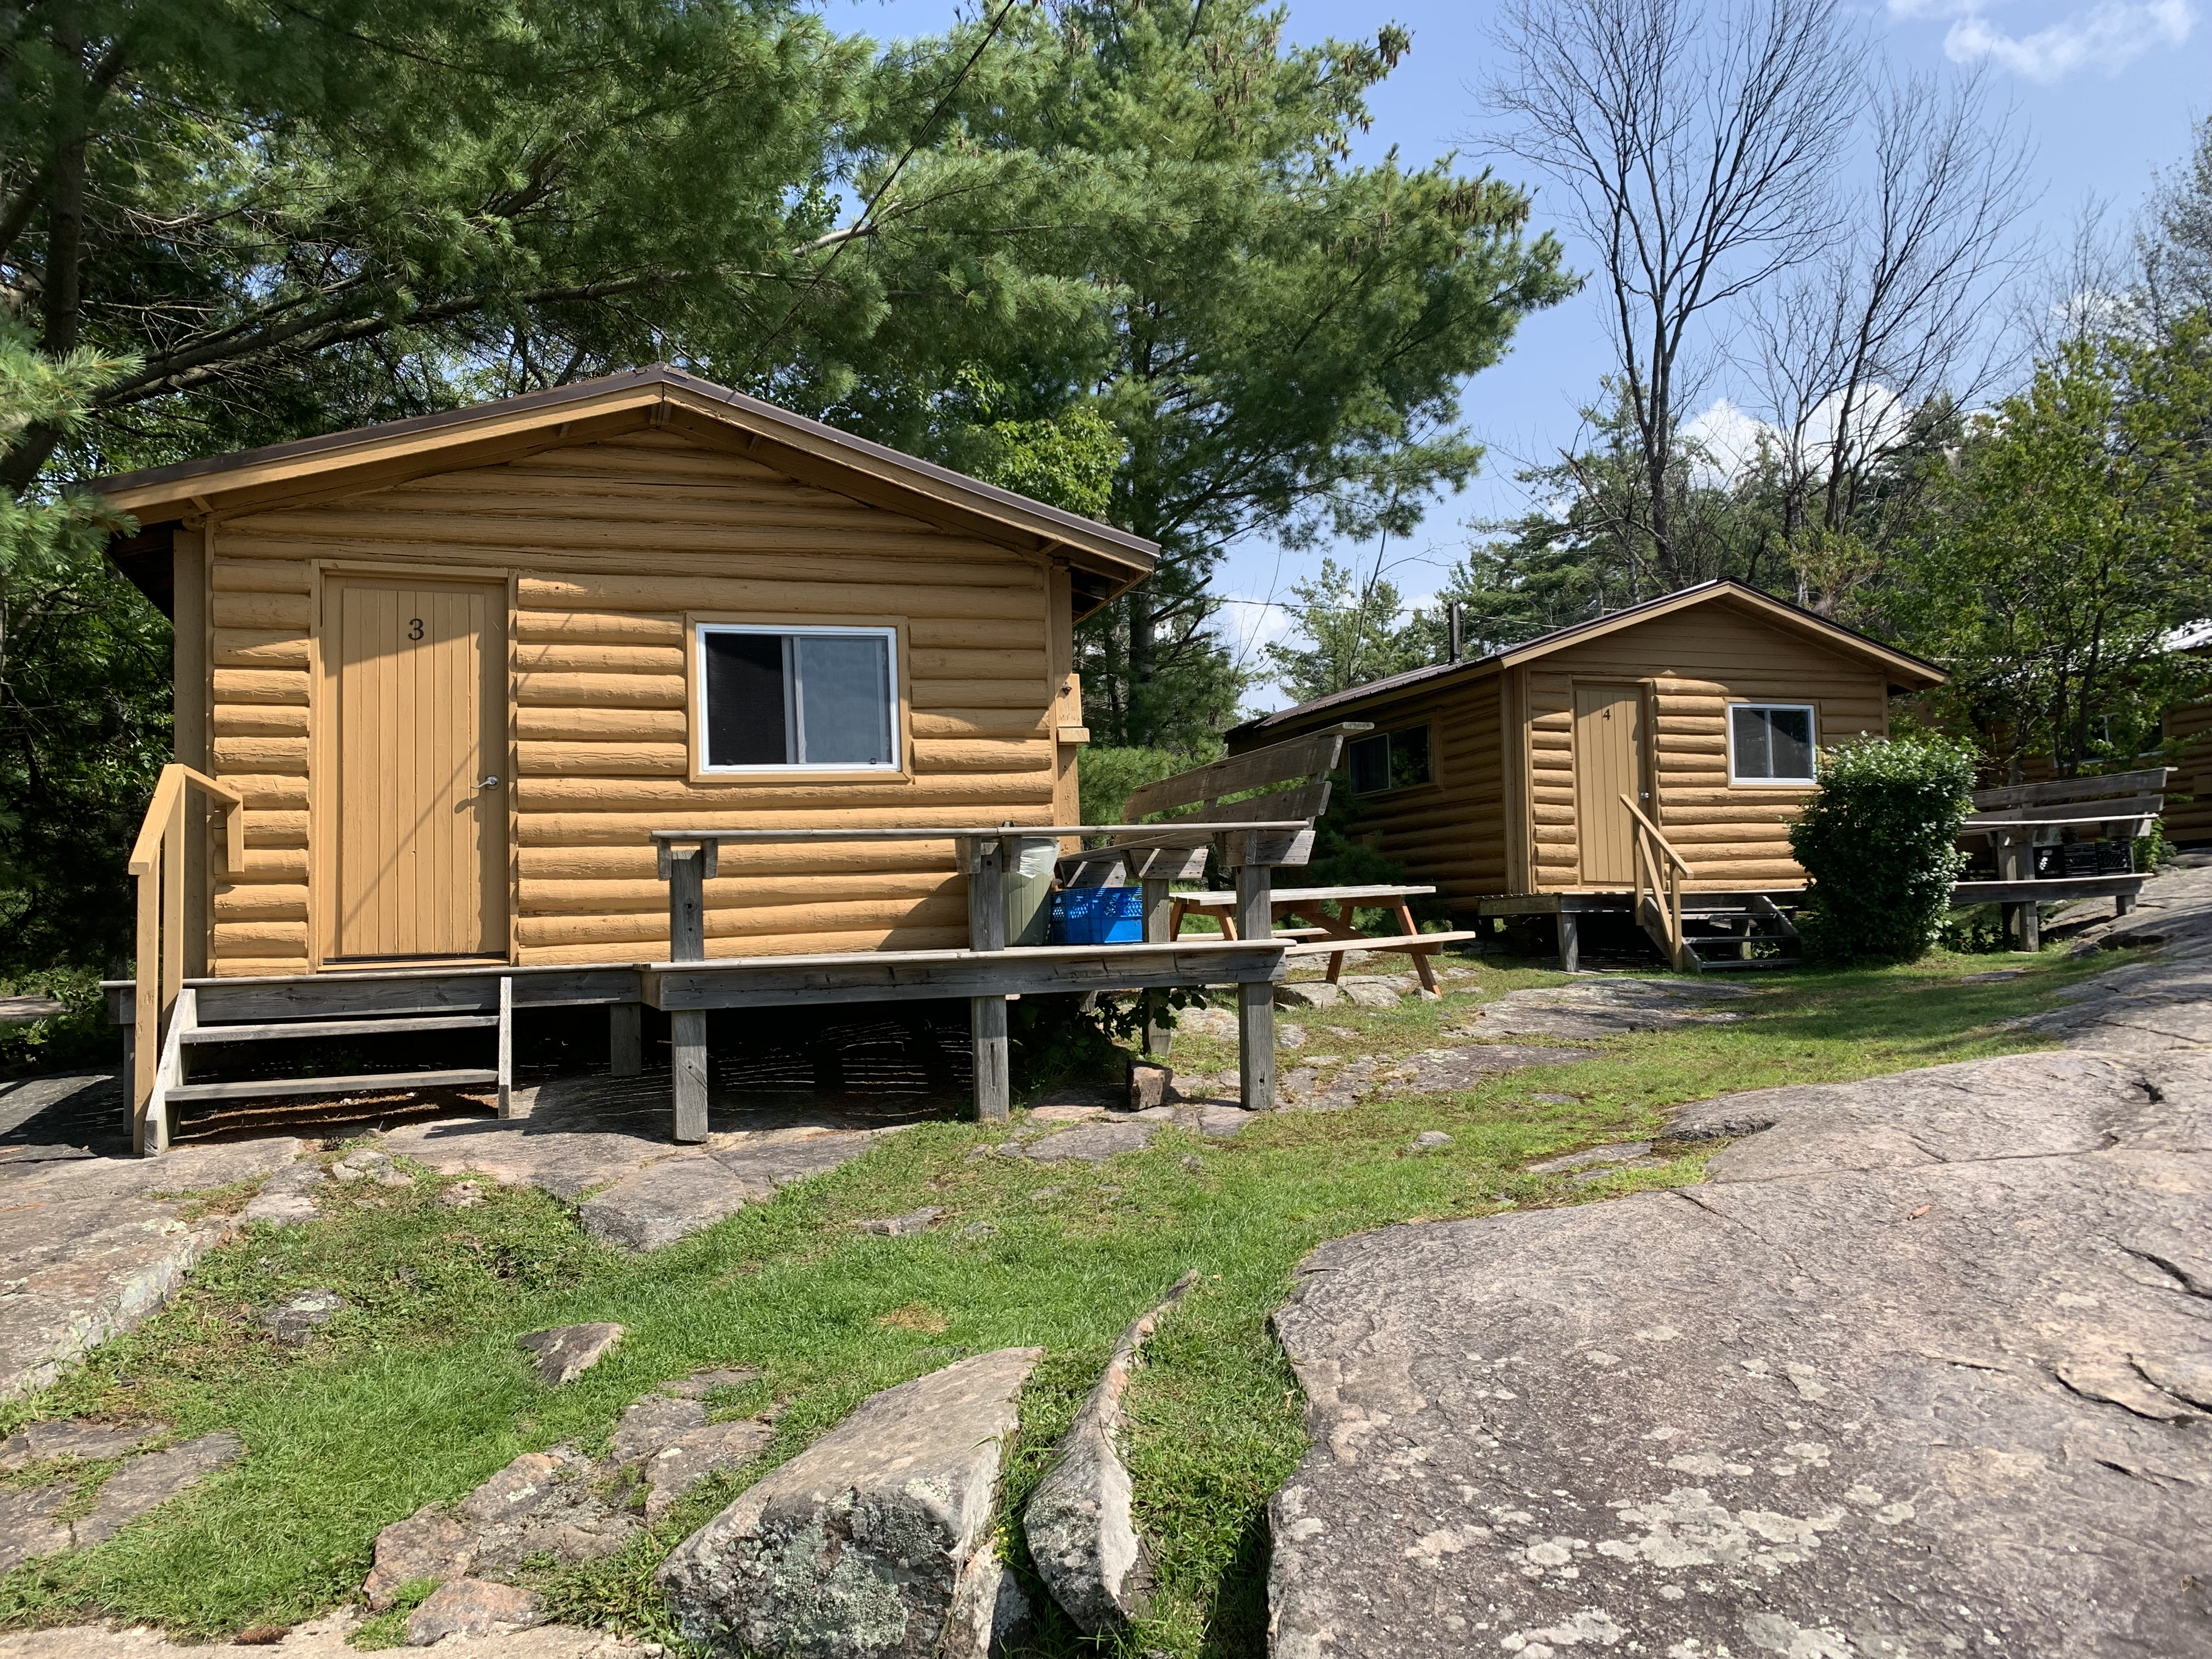 Cabins 3 & 4, 1-bedroom cabins no kitchen